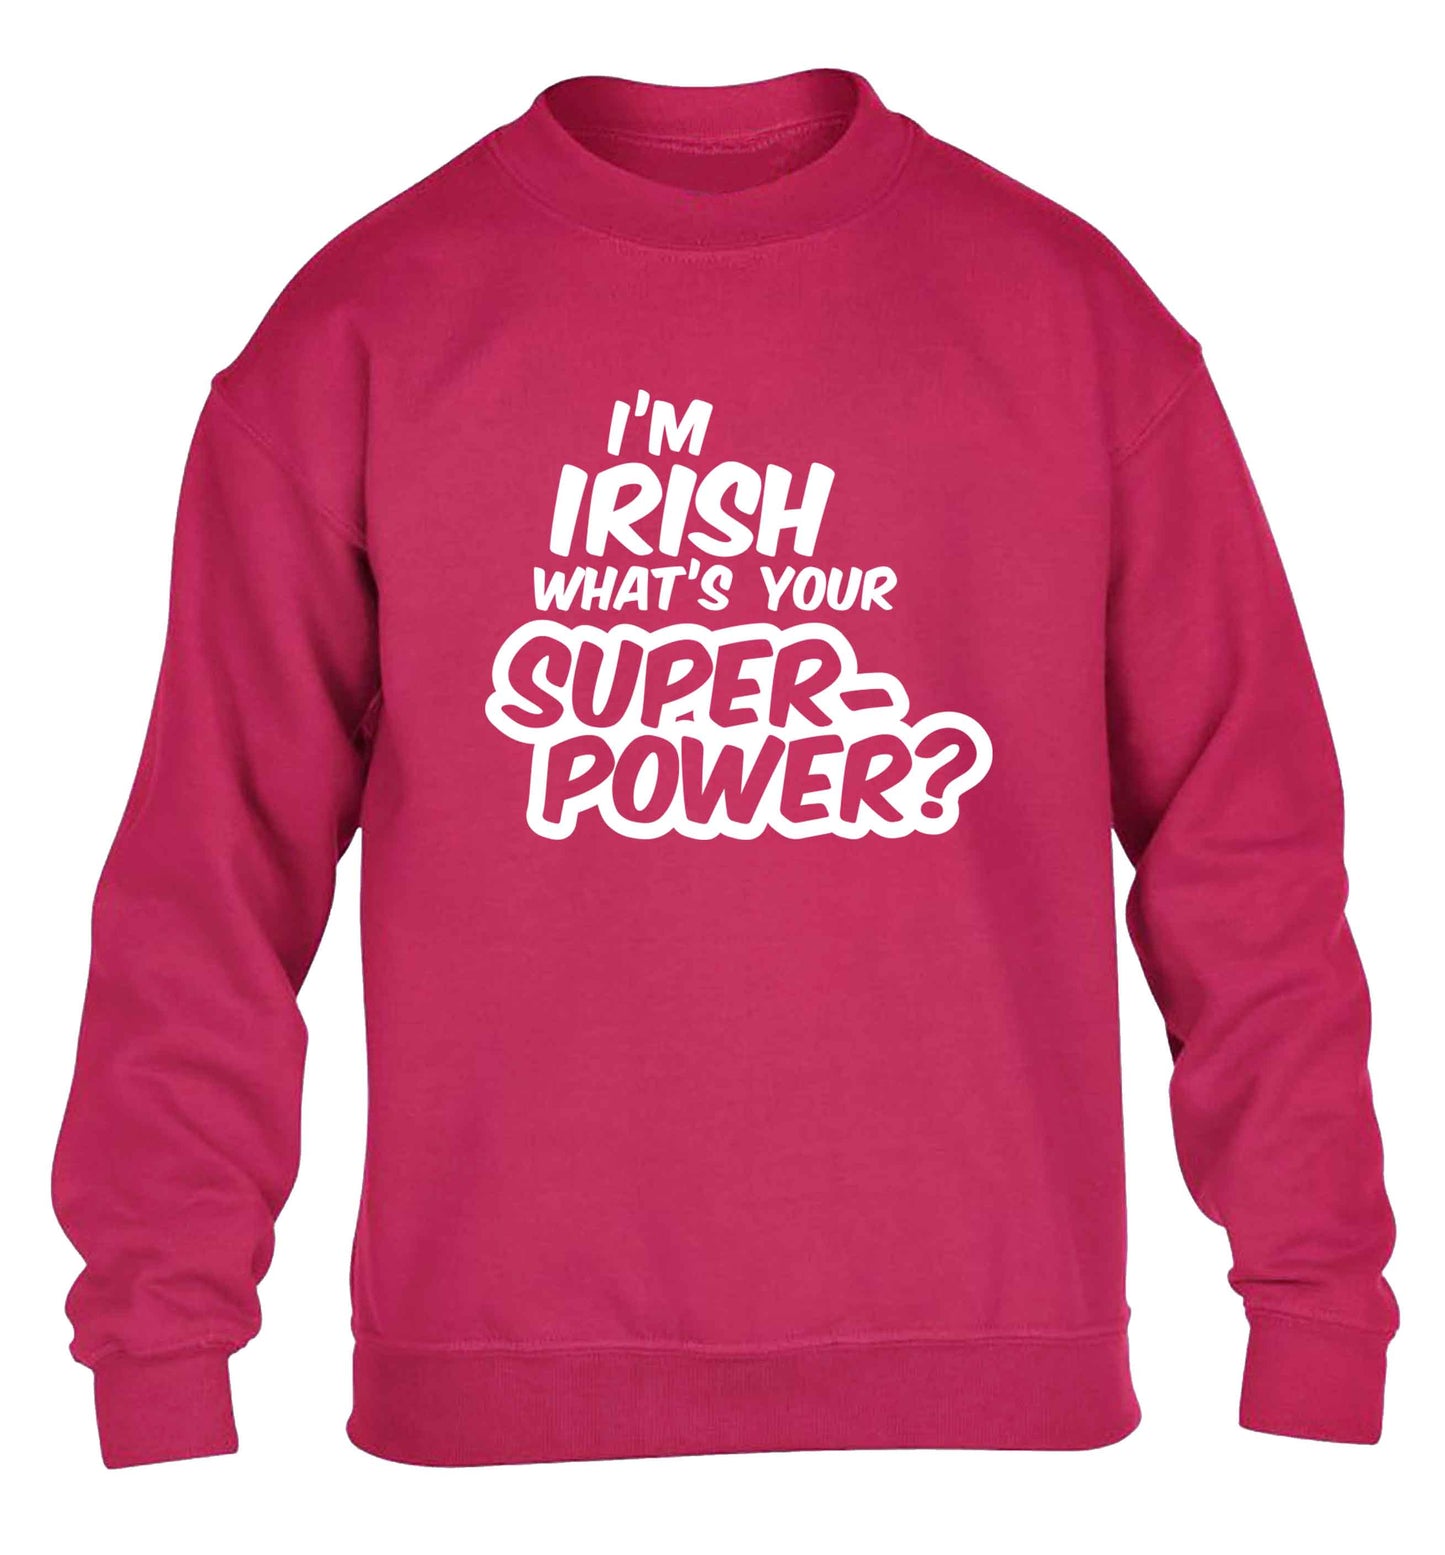 I'm Irish what's your superpower? children's pink sweater 12-13 Years